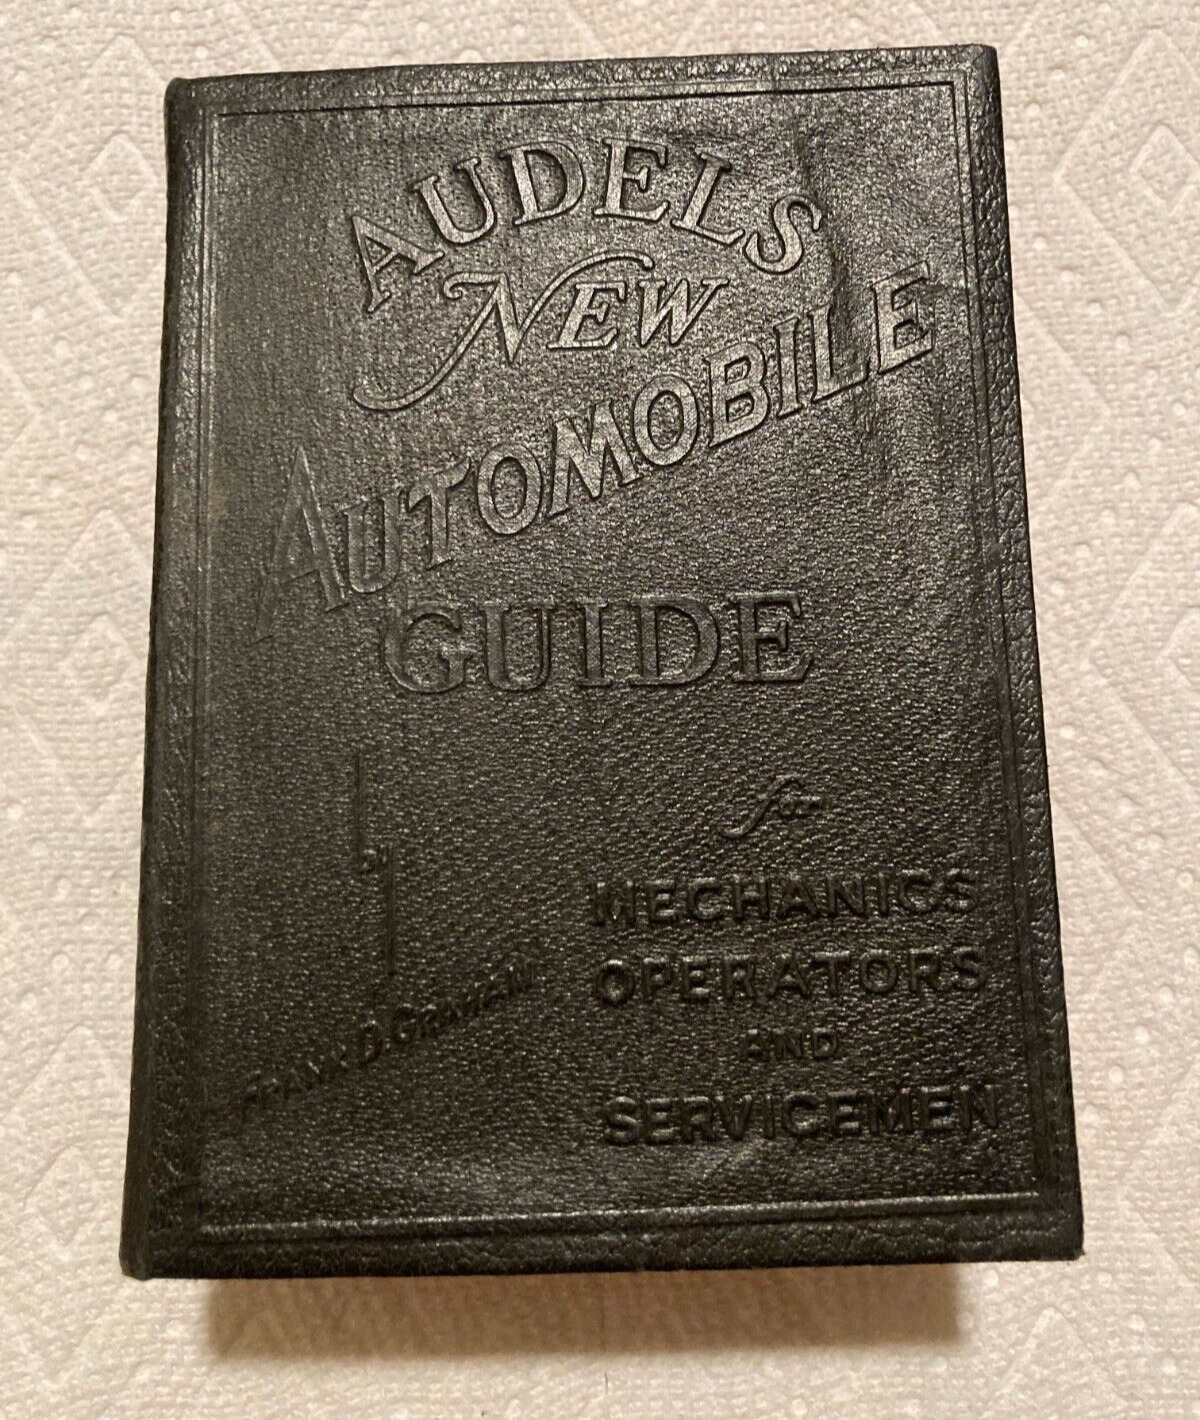 Vintage Audels New Automobile Guide 1945 For Mechanics Collectors *White Pages*